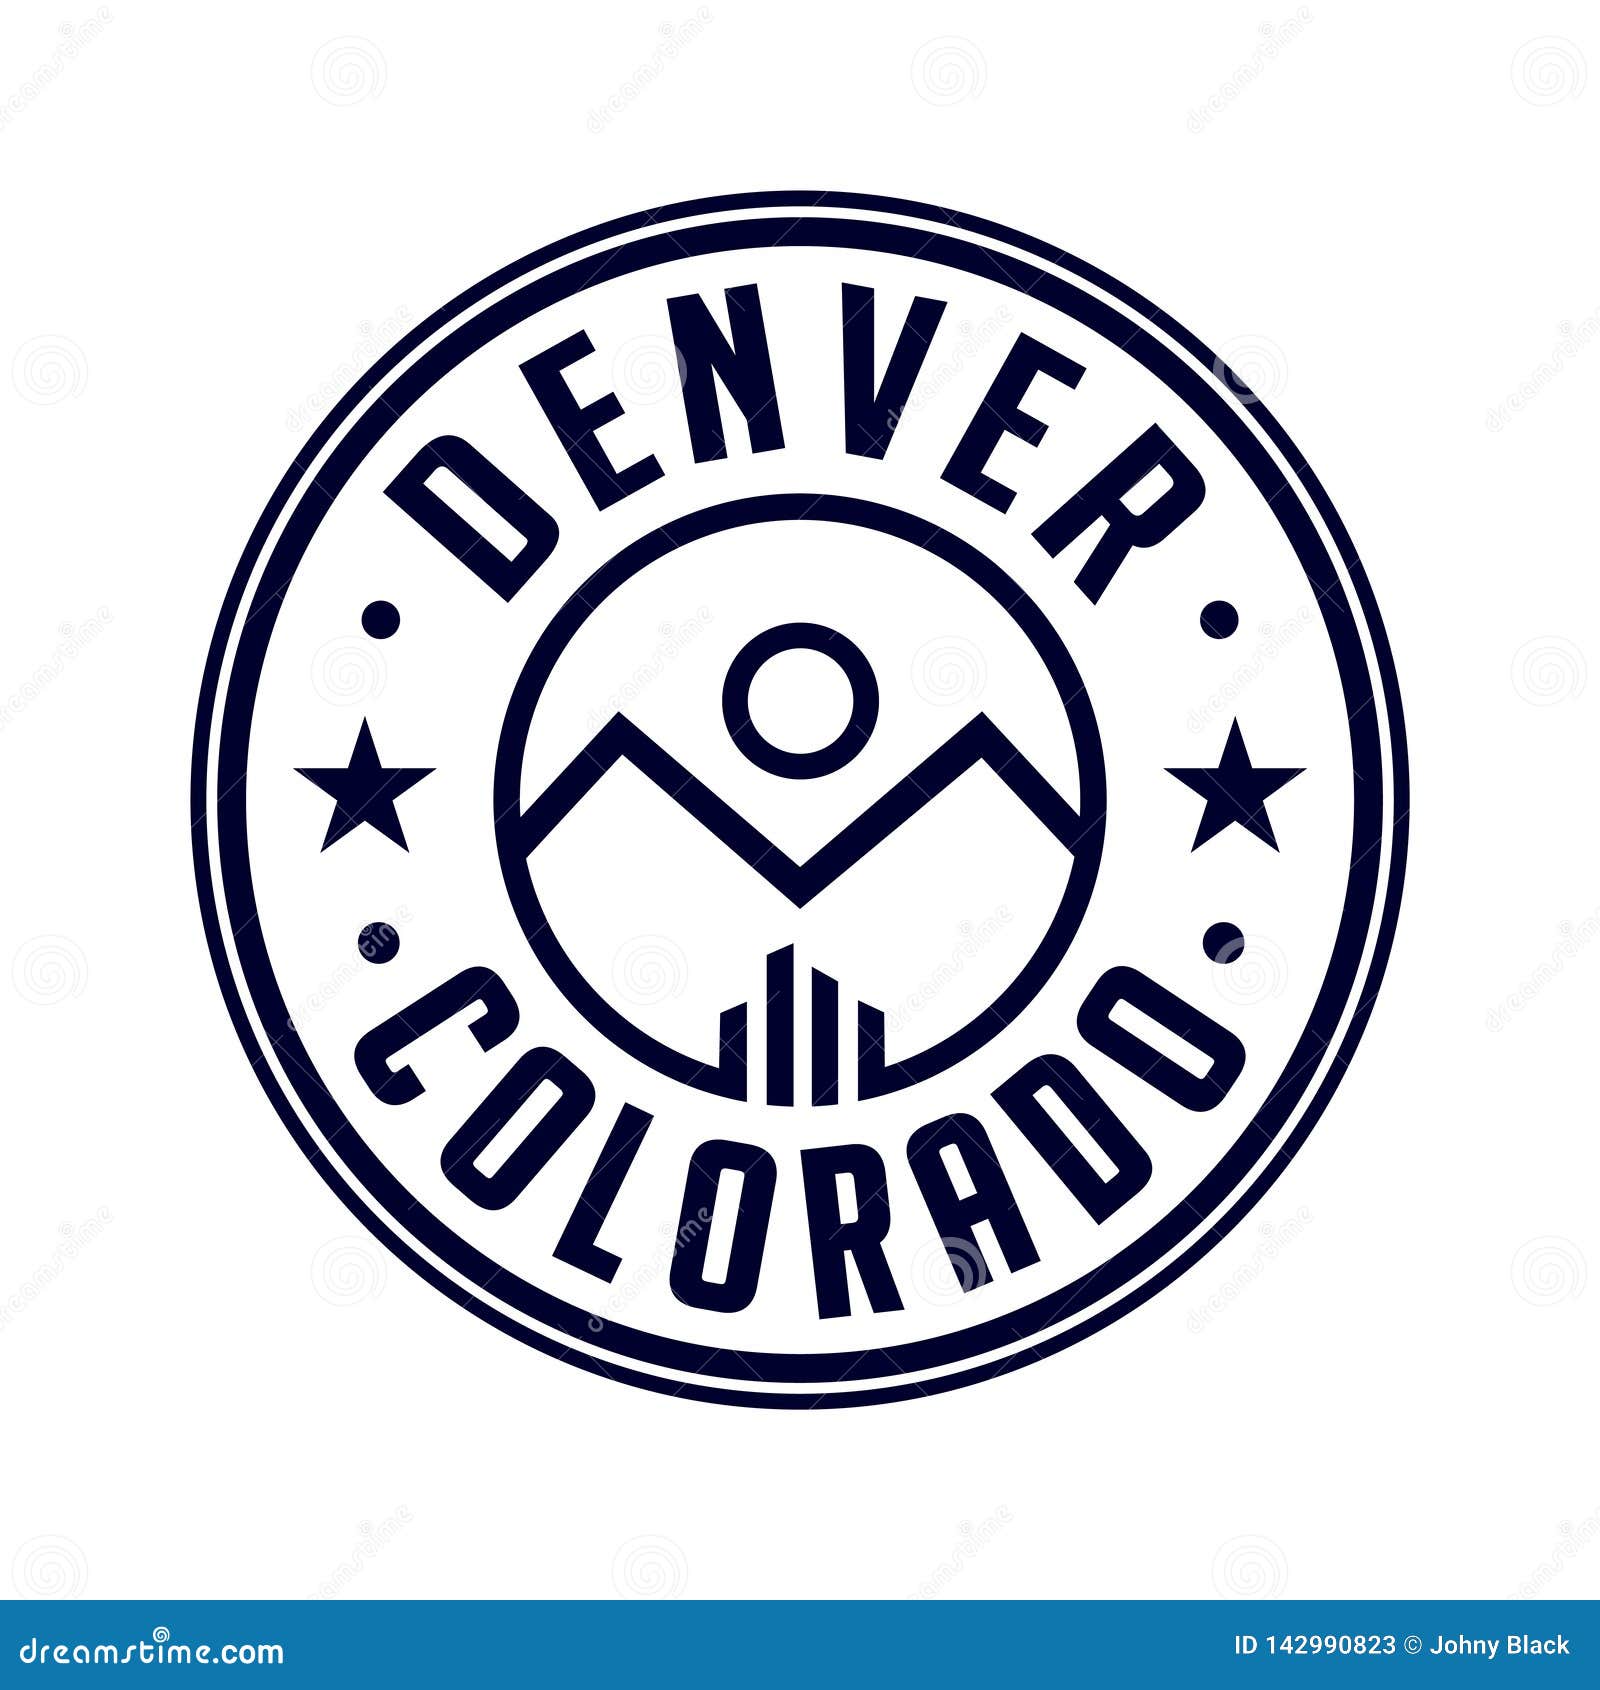 Denver Logo Design. Vector And Illustration. | CartoonDealer.com #132853637